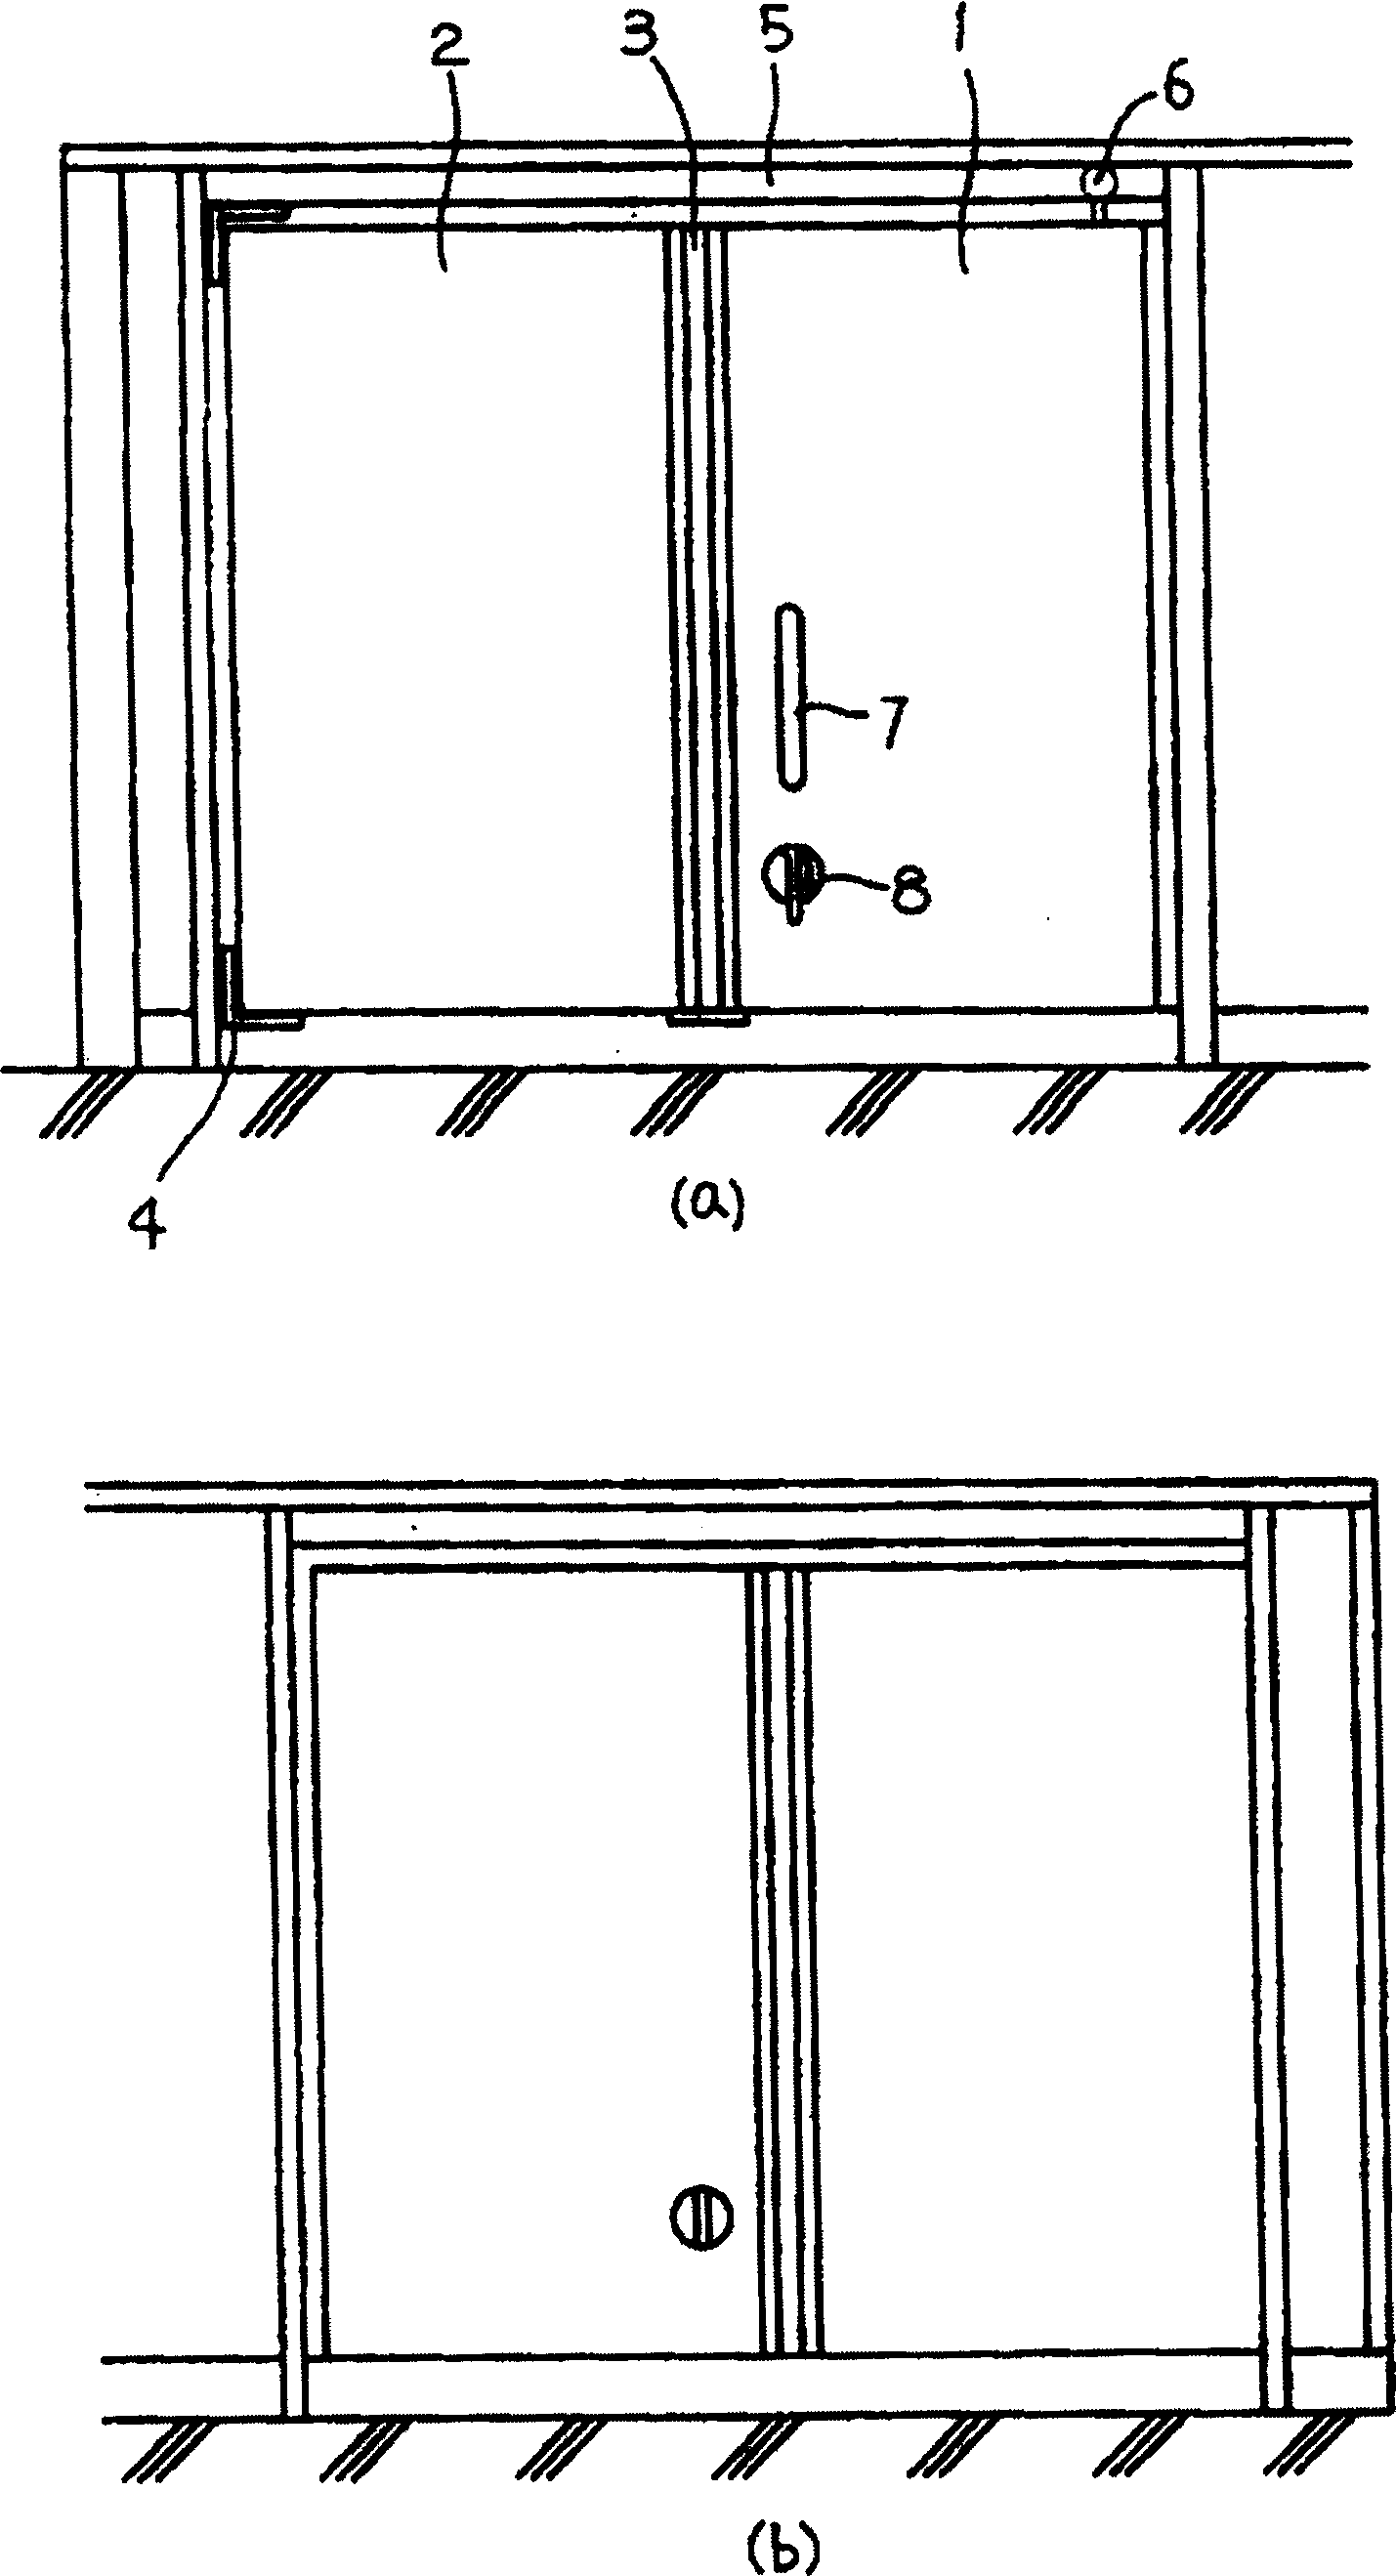 Folding door device